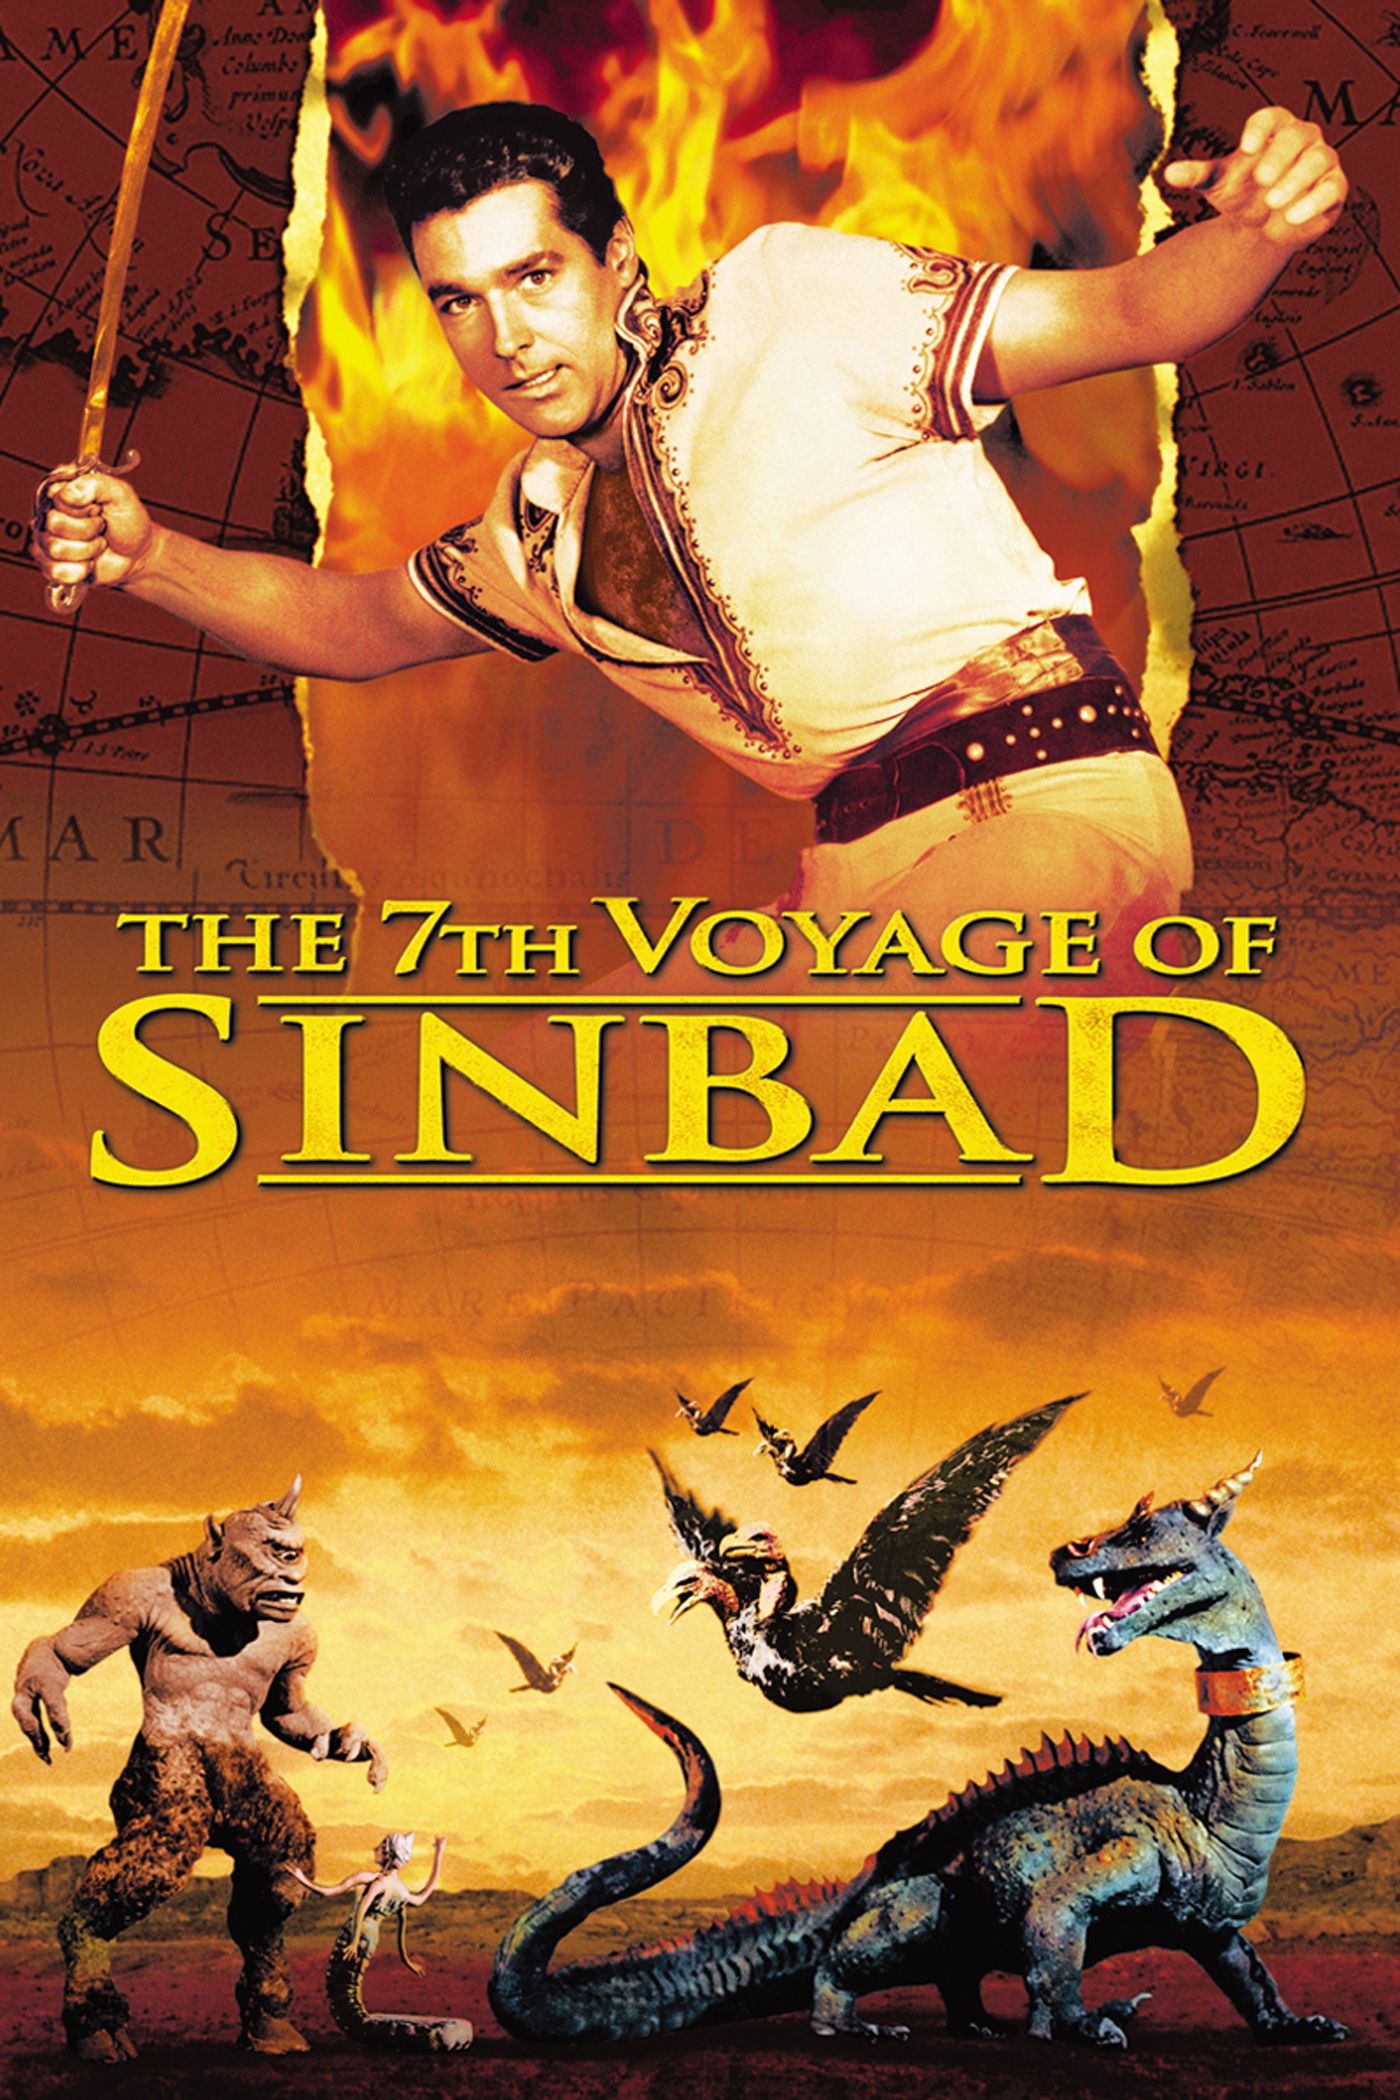 FULL MOVIE: The 7th Voyage of Sinbad (1958)